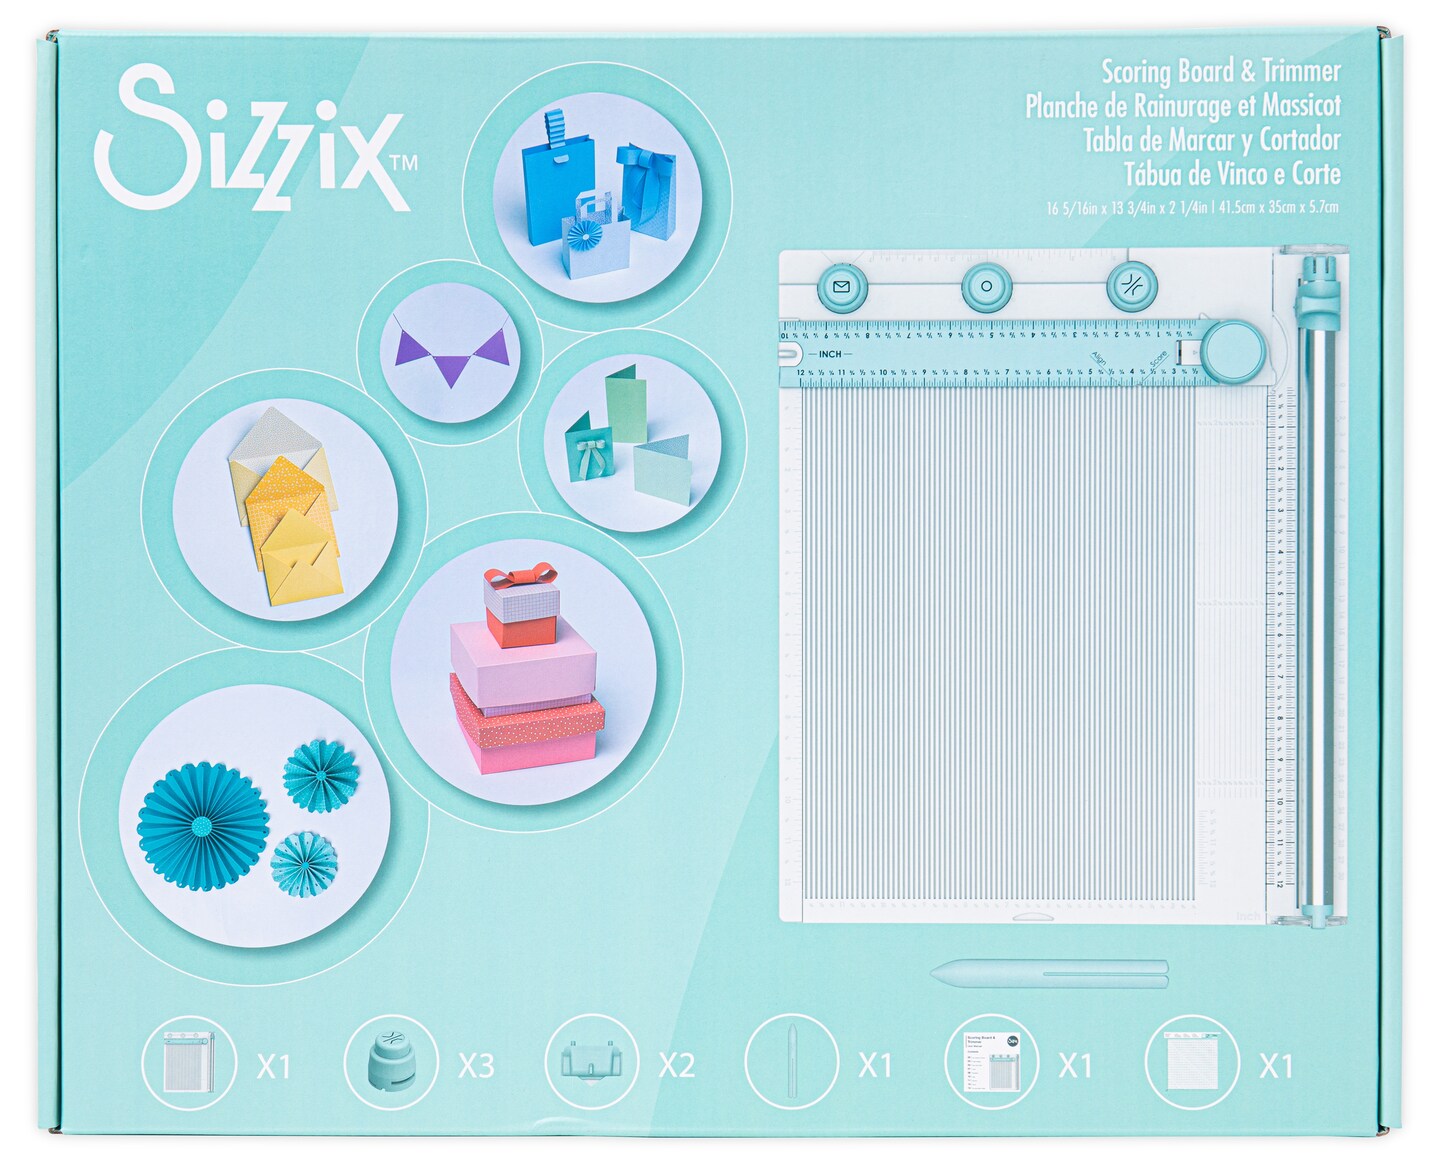 Sizzix Making Tool Scoring Board &#x26; Trimmer